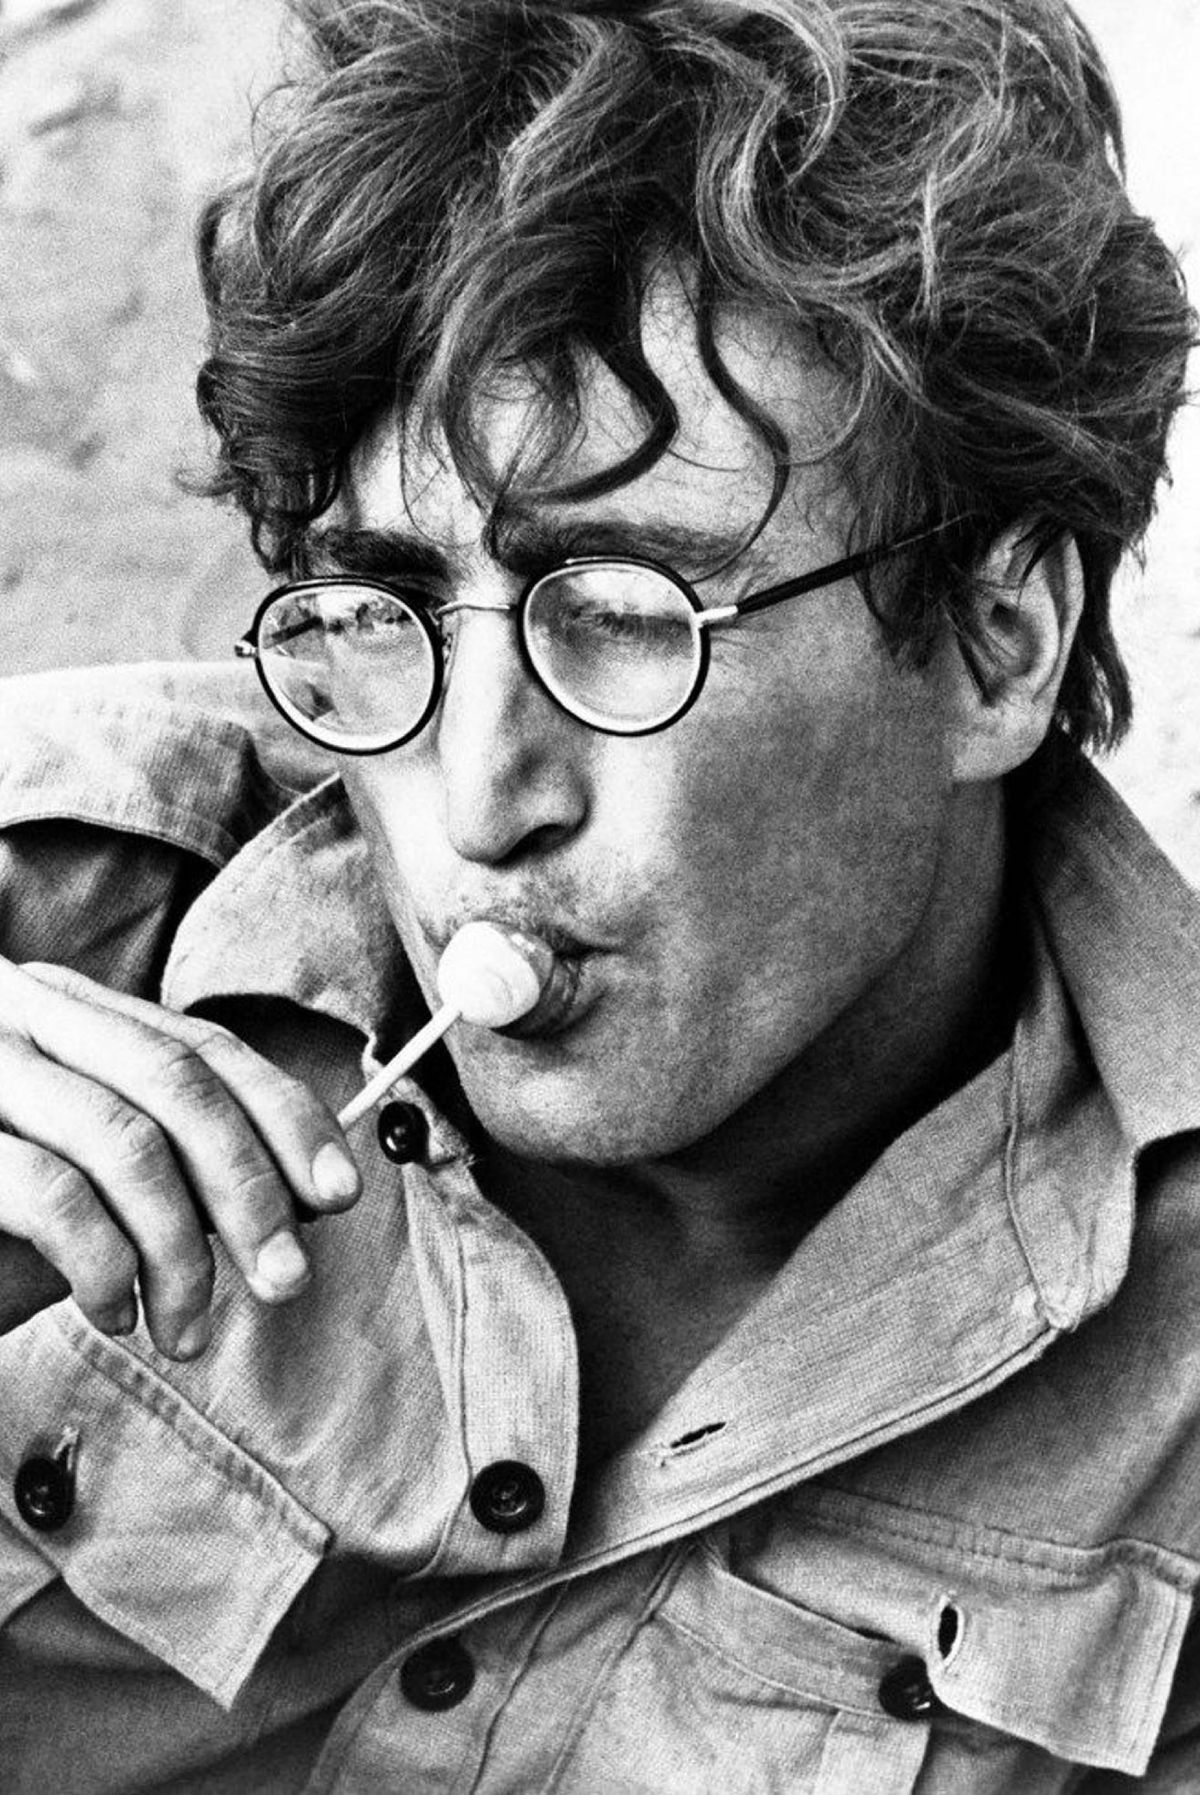 John Lennon com um pirulito